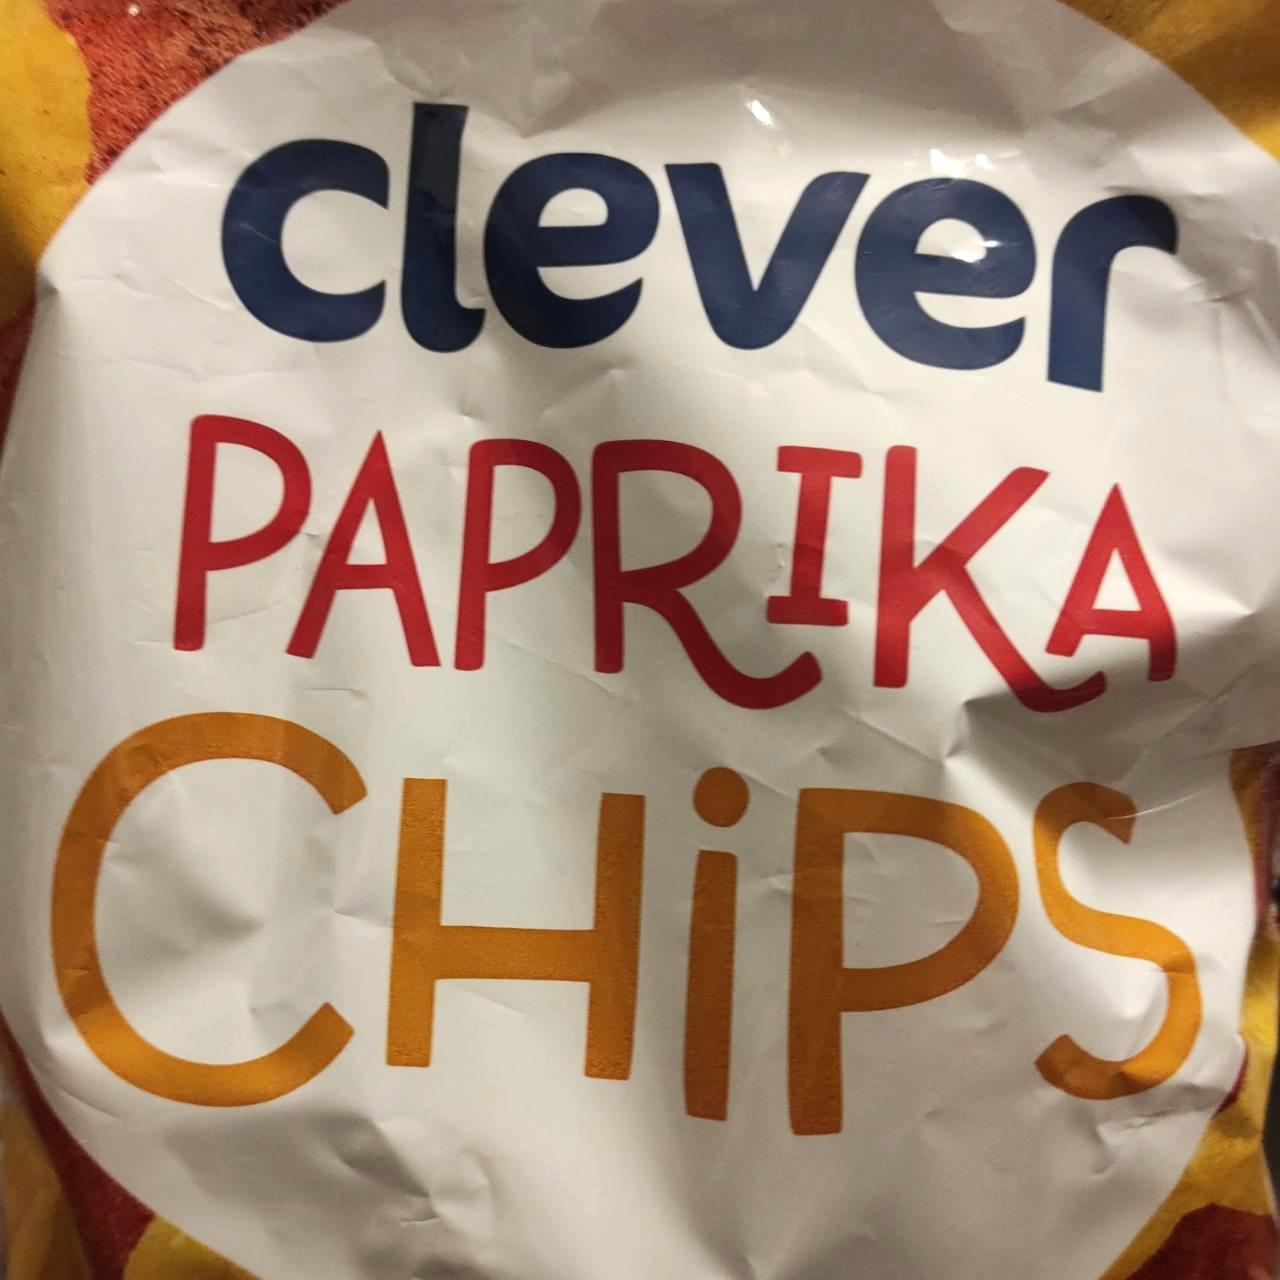 Képek - Paprika chips Clever